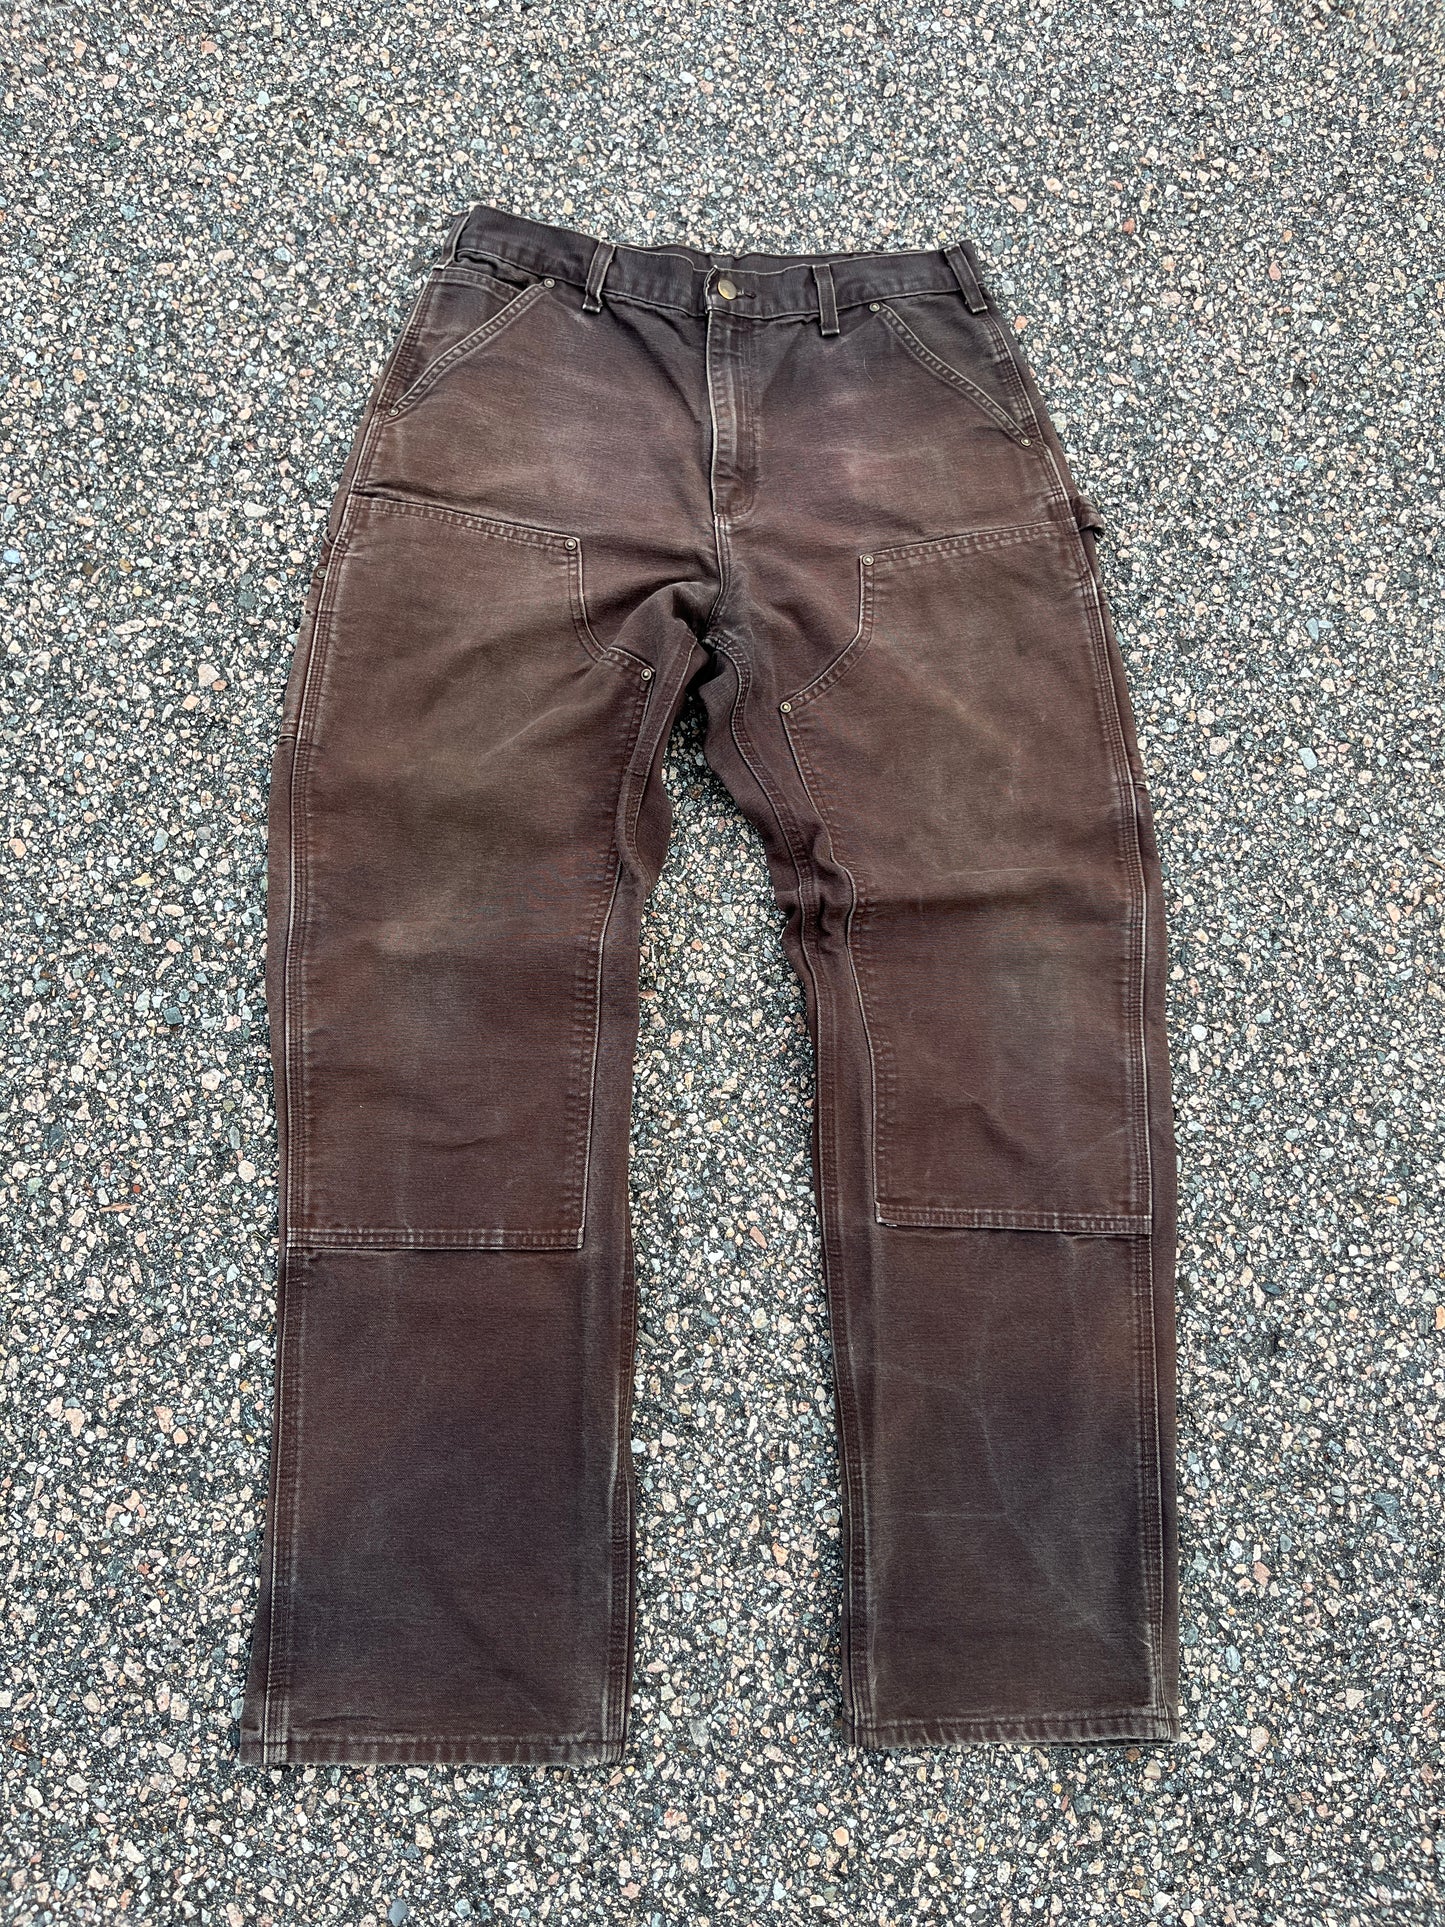 Faded Brown Carhartt Double Knee Pants - 33 x 32